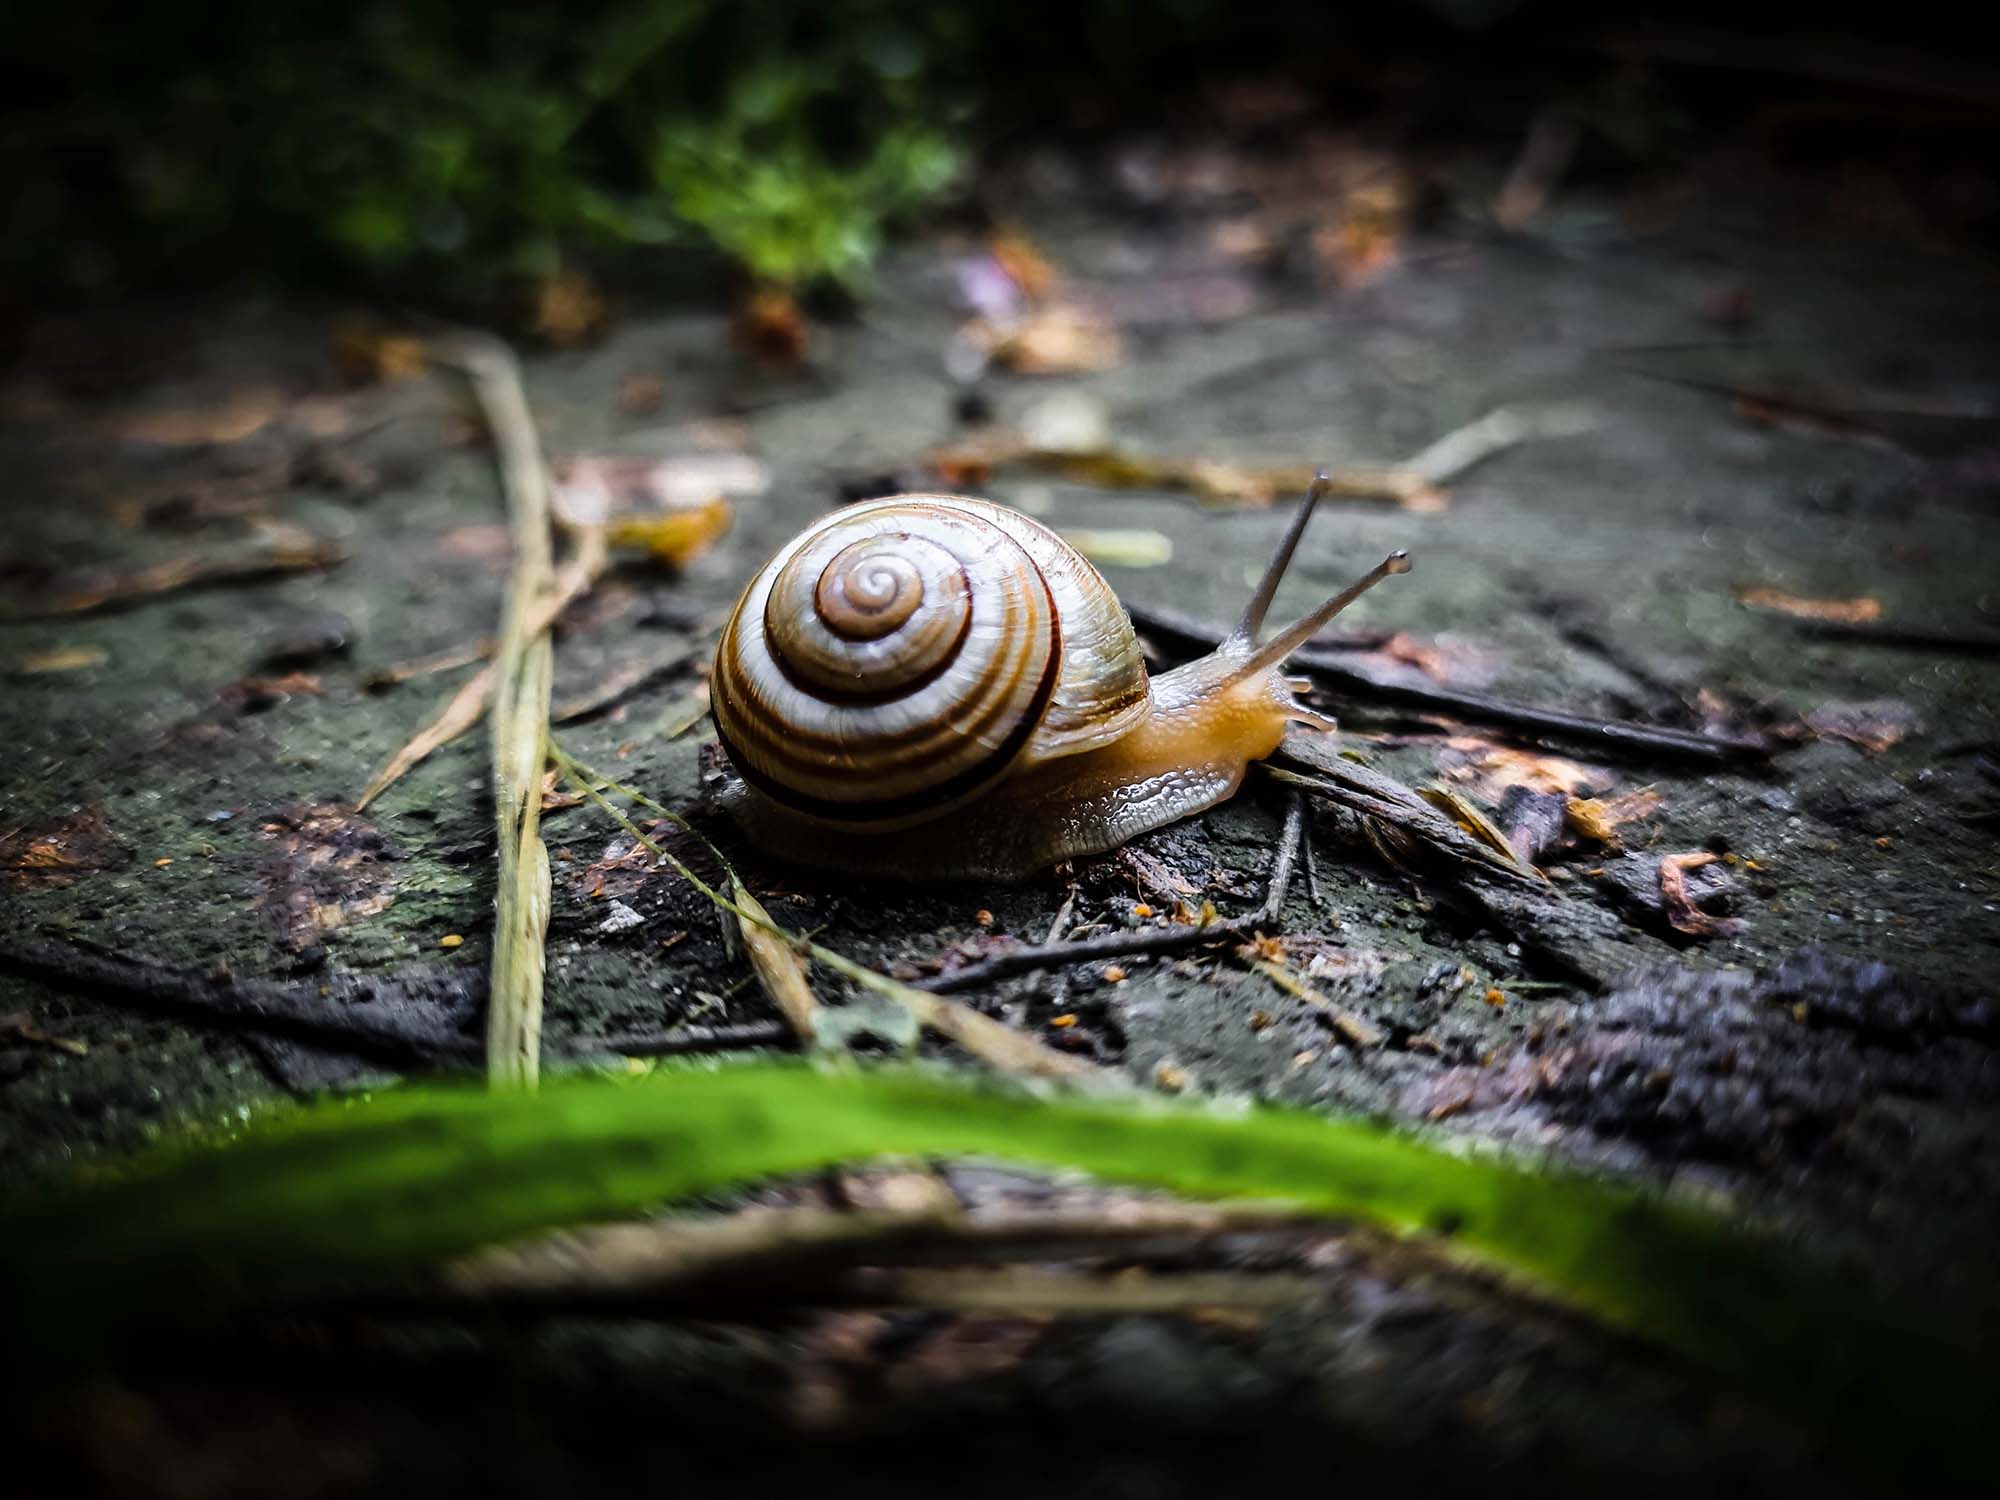 A snail traversing the ground